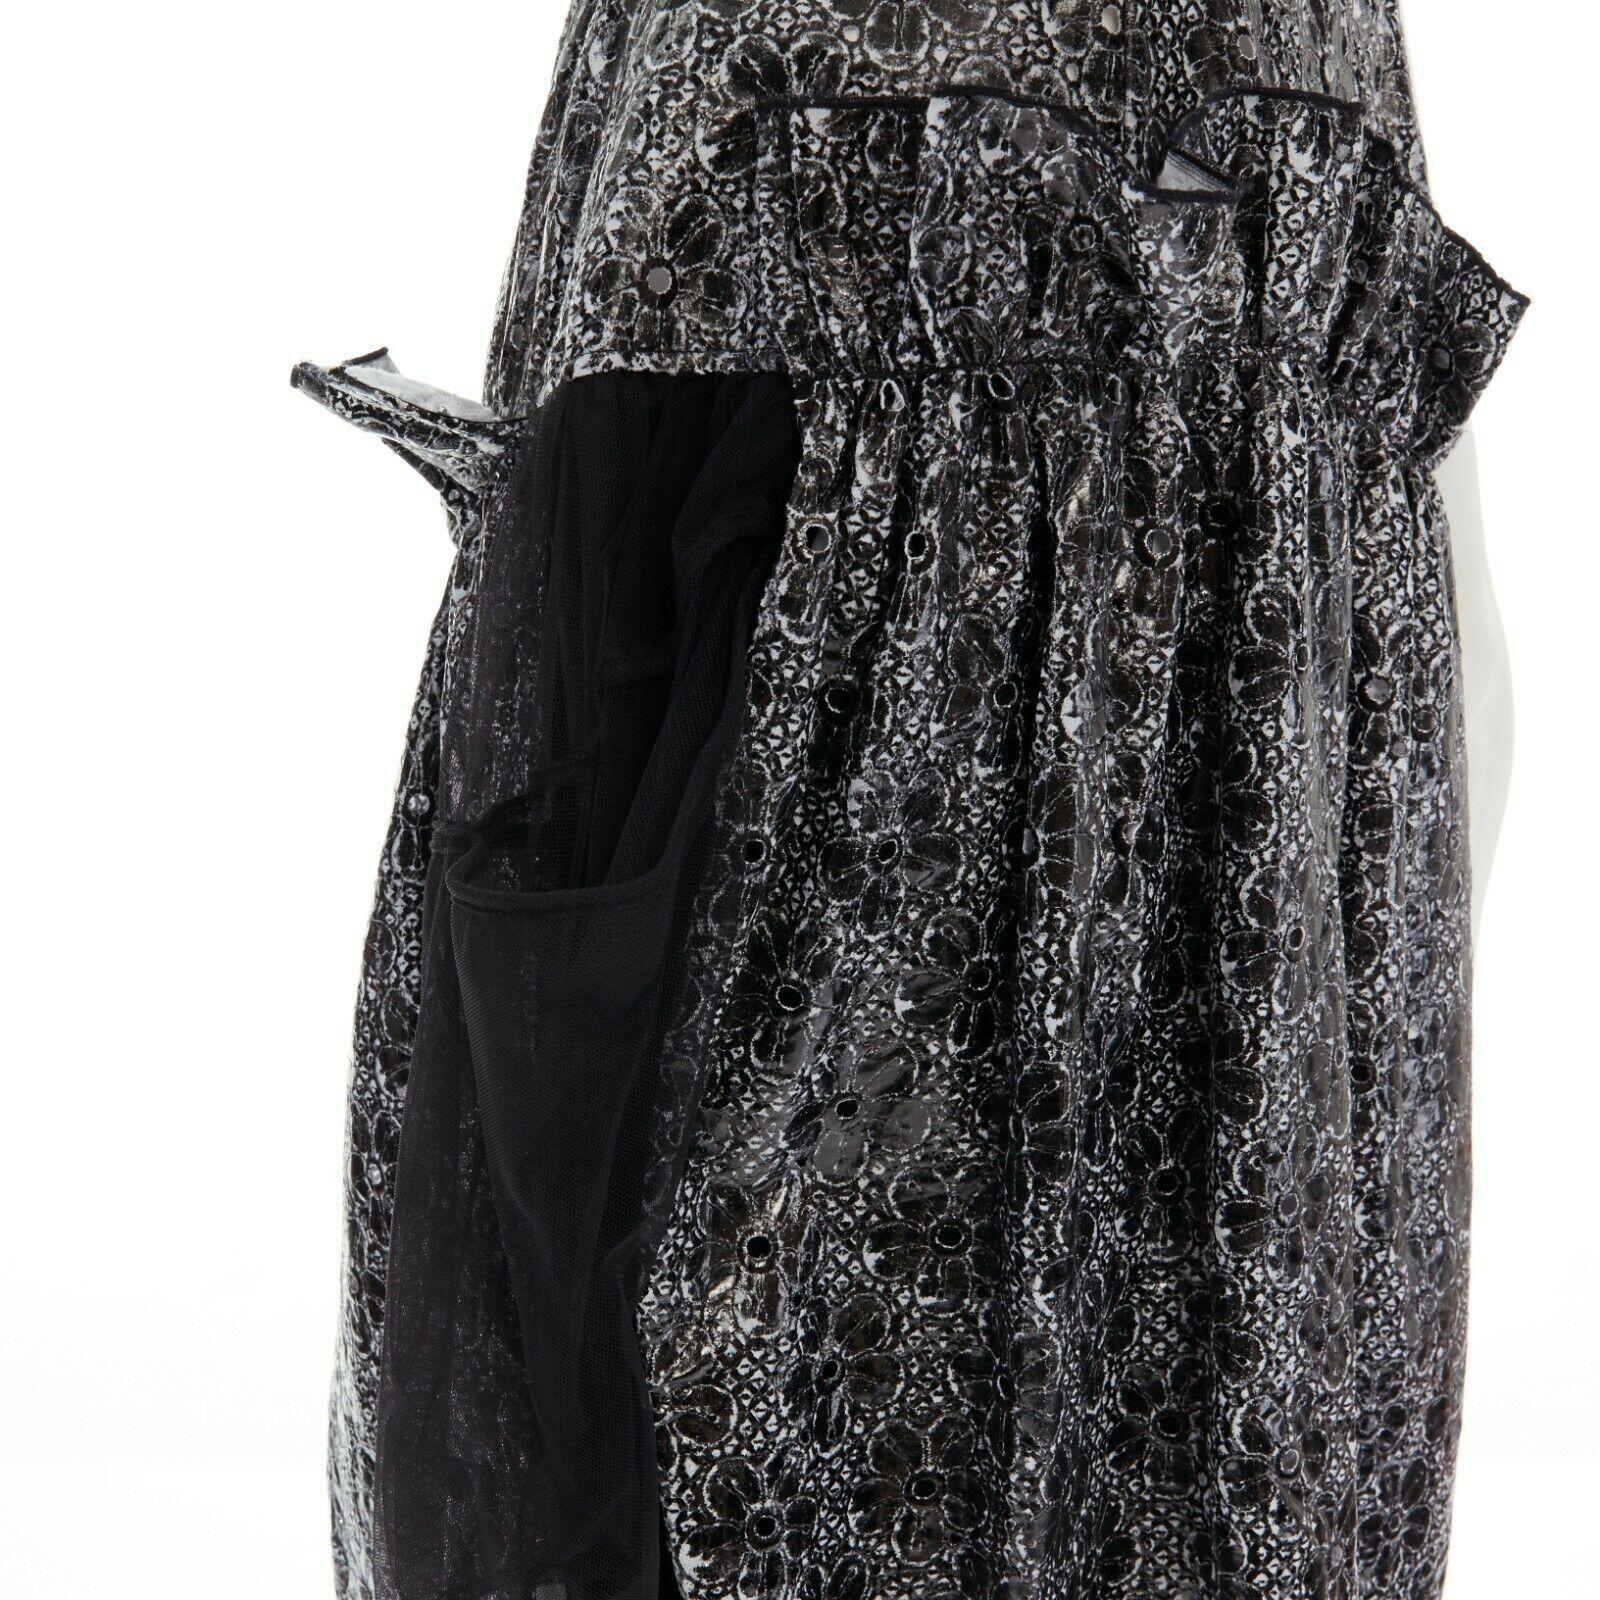 runway SIMONE ROCHA SS14 black laminate floral cotton tulle skirt dress UK10 M 3